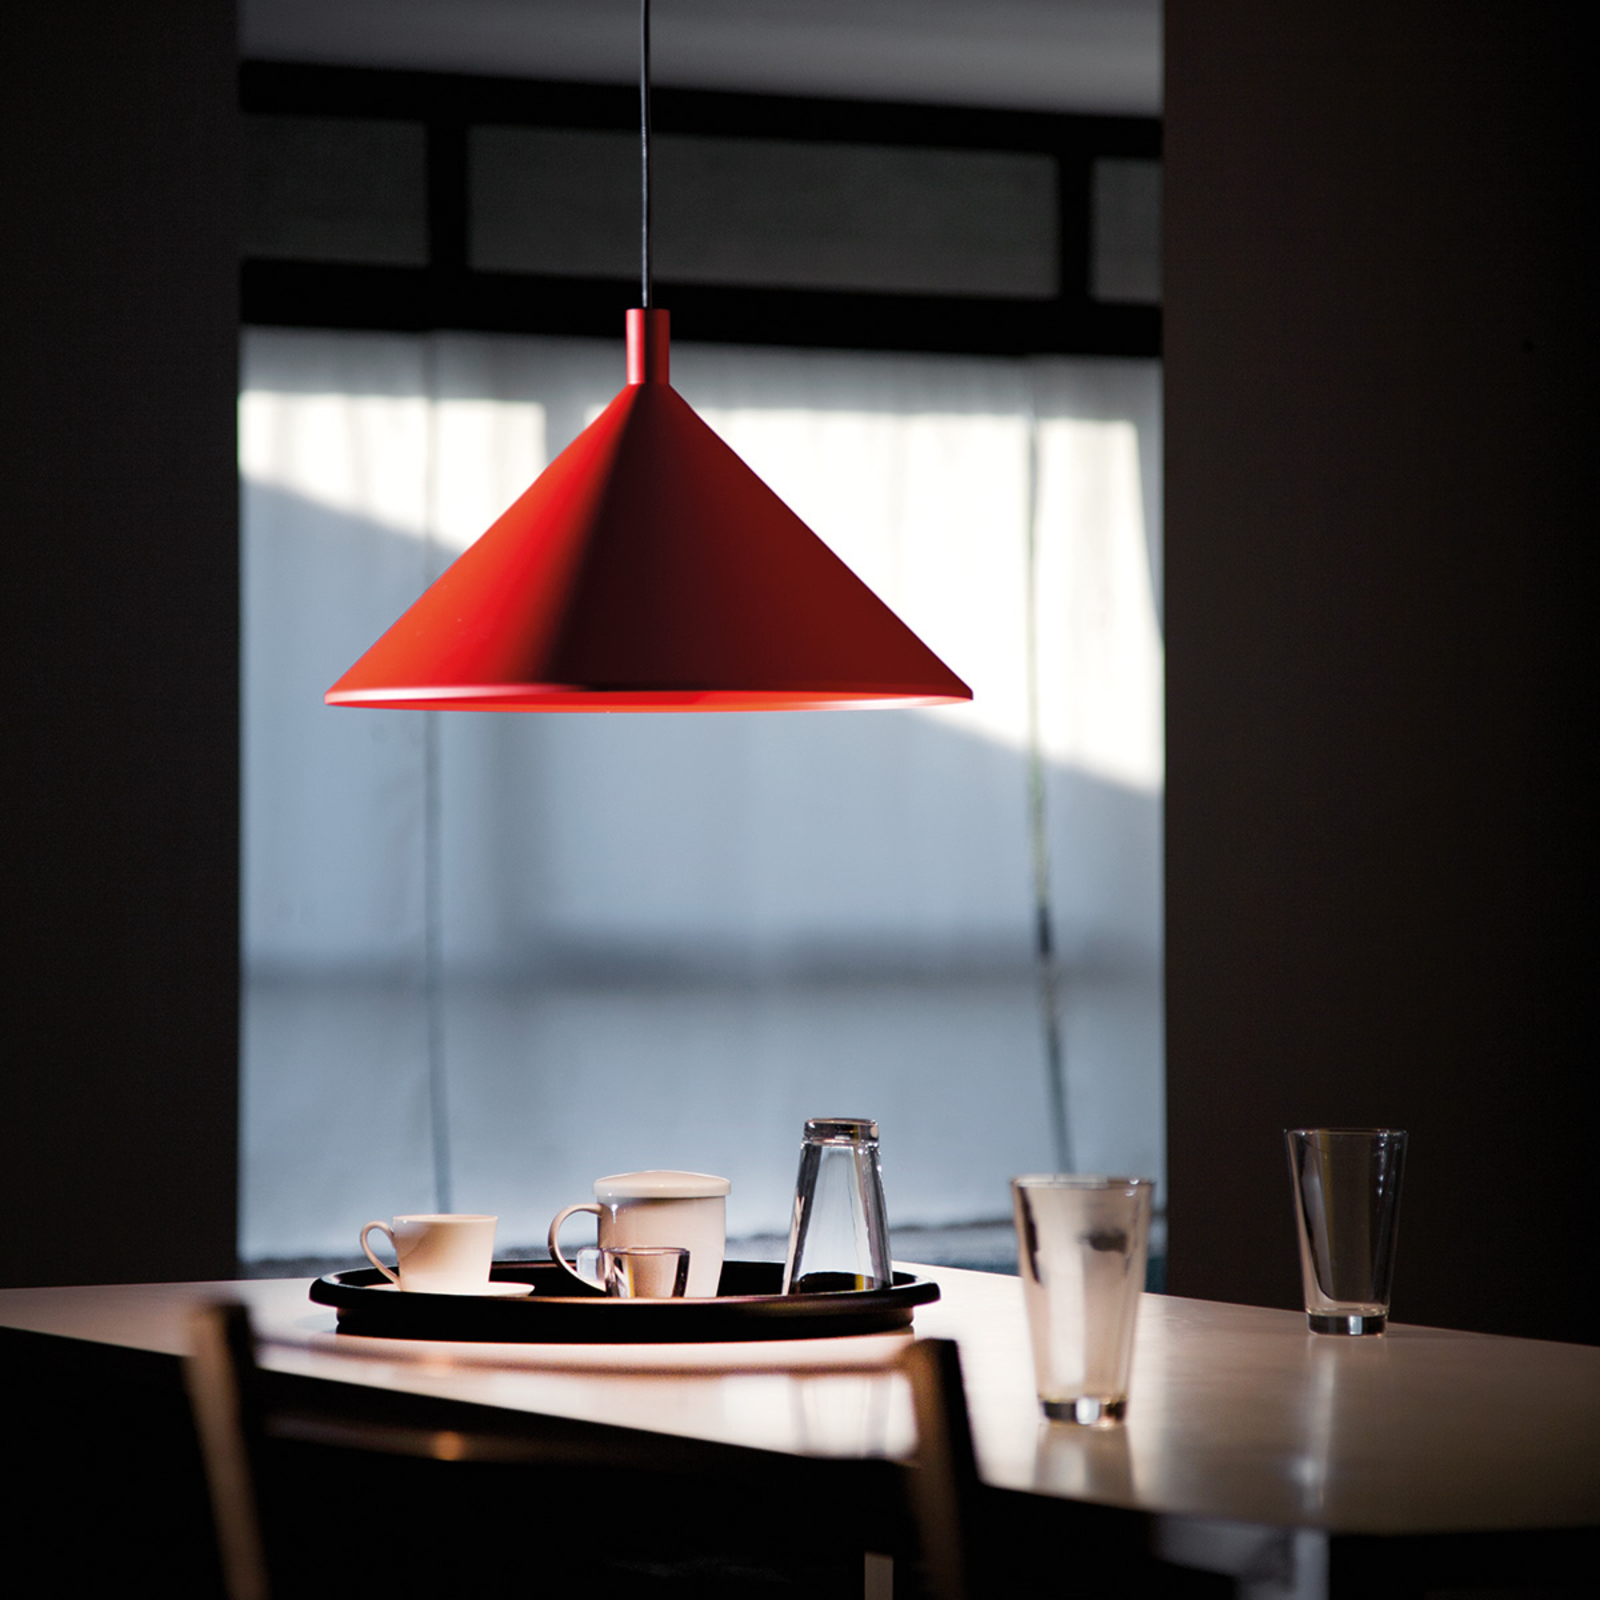 Висяща лампа Martinelli Luce Cono, червена, Ø 45 cm